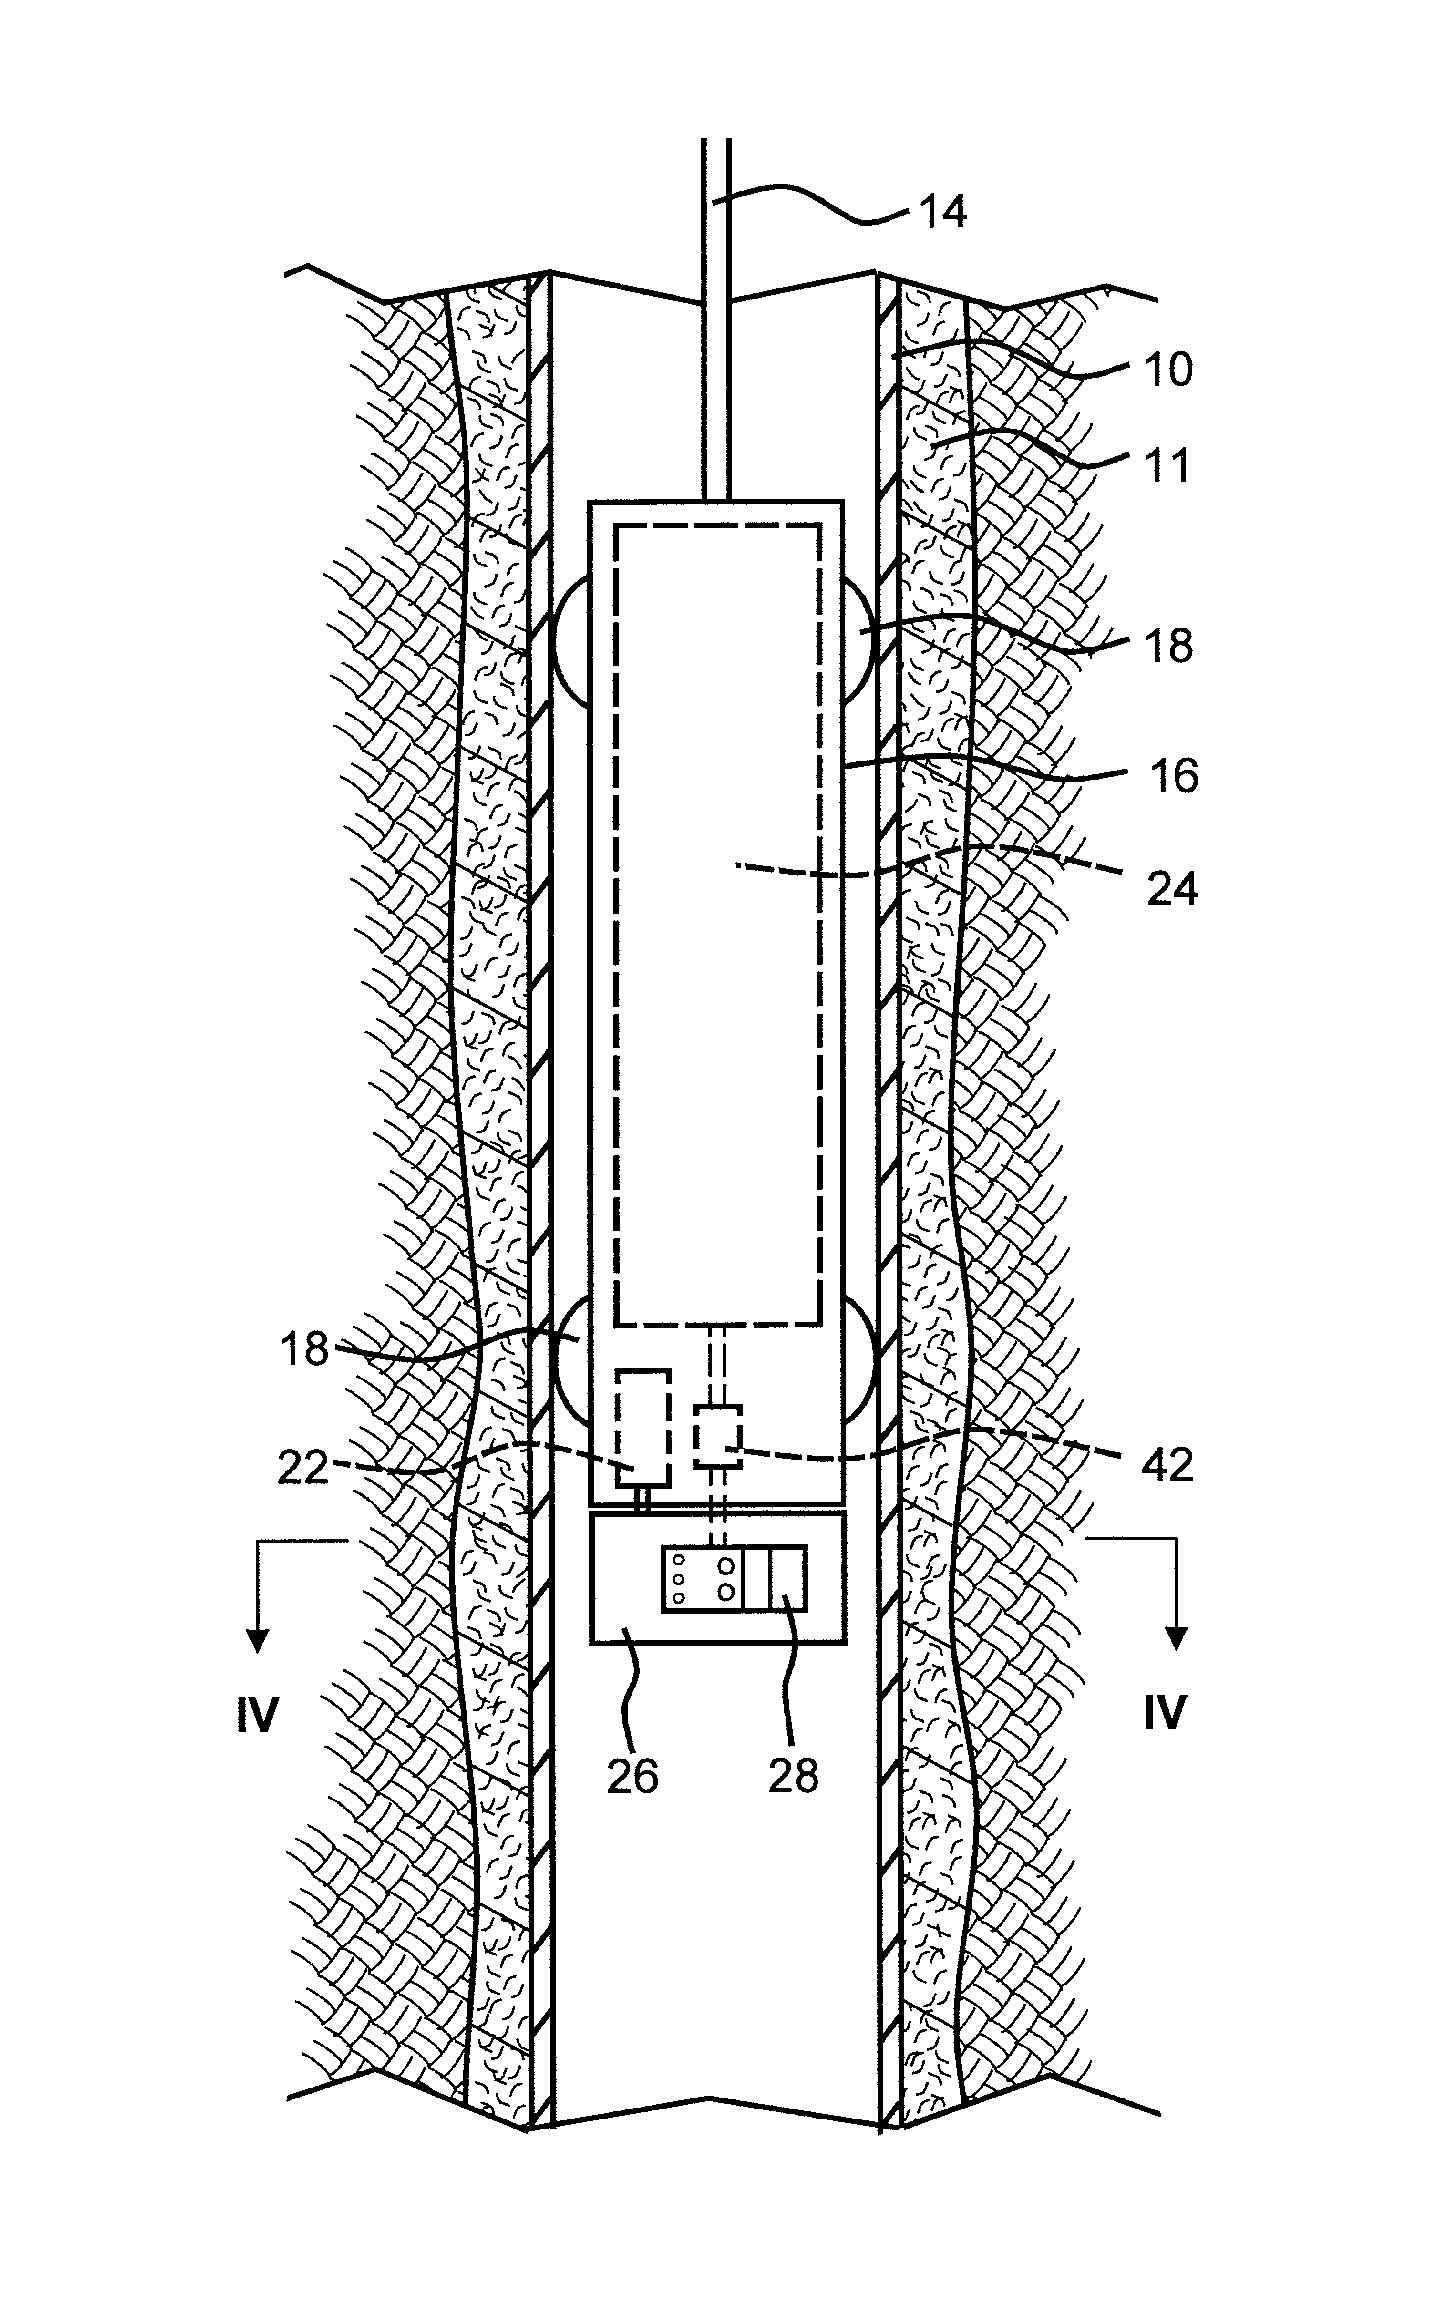 Lining of wellbore tubing